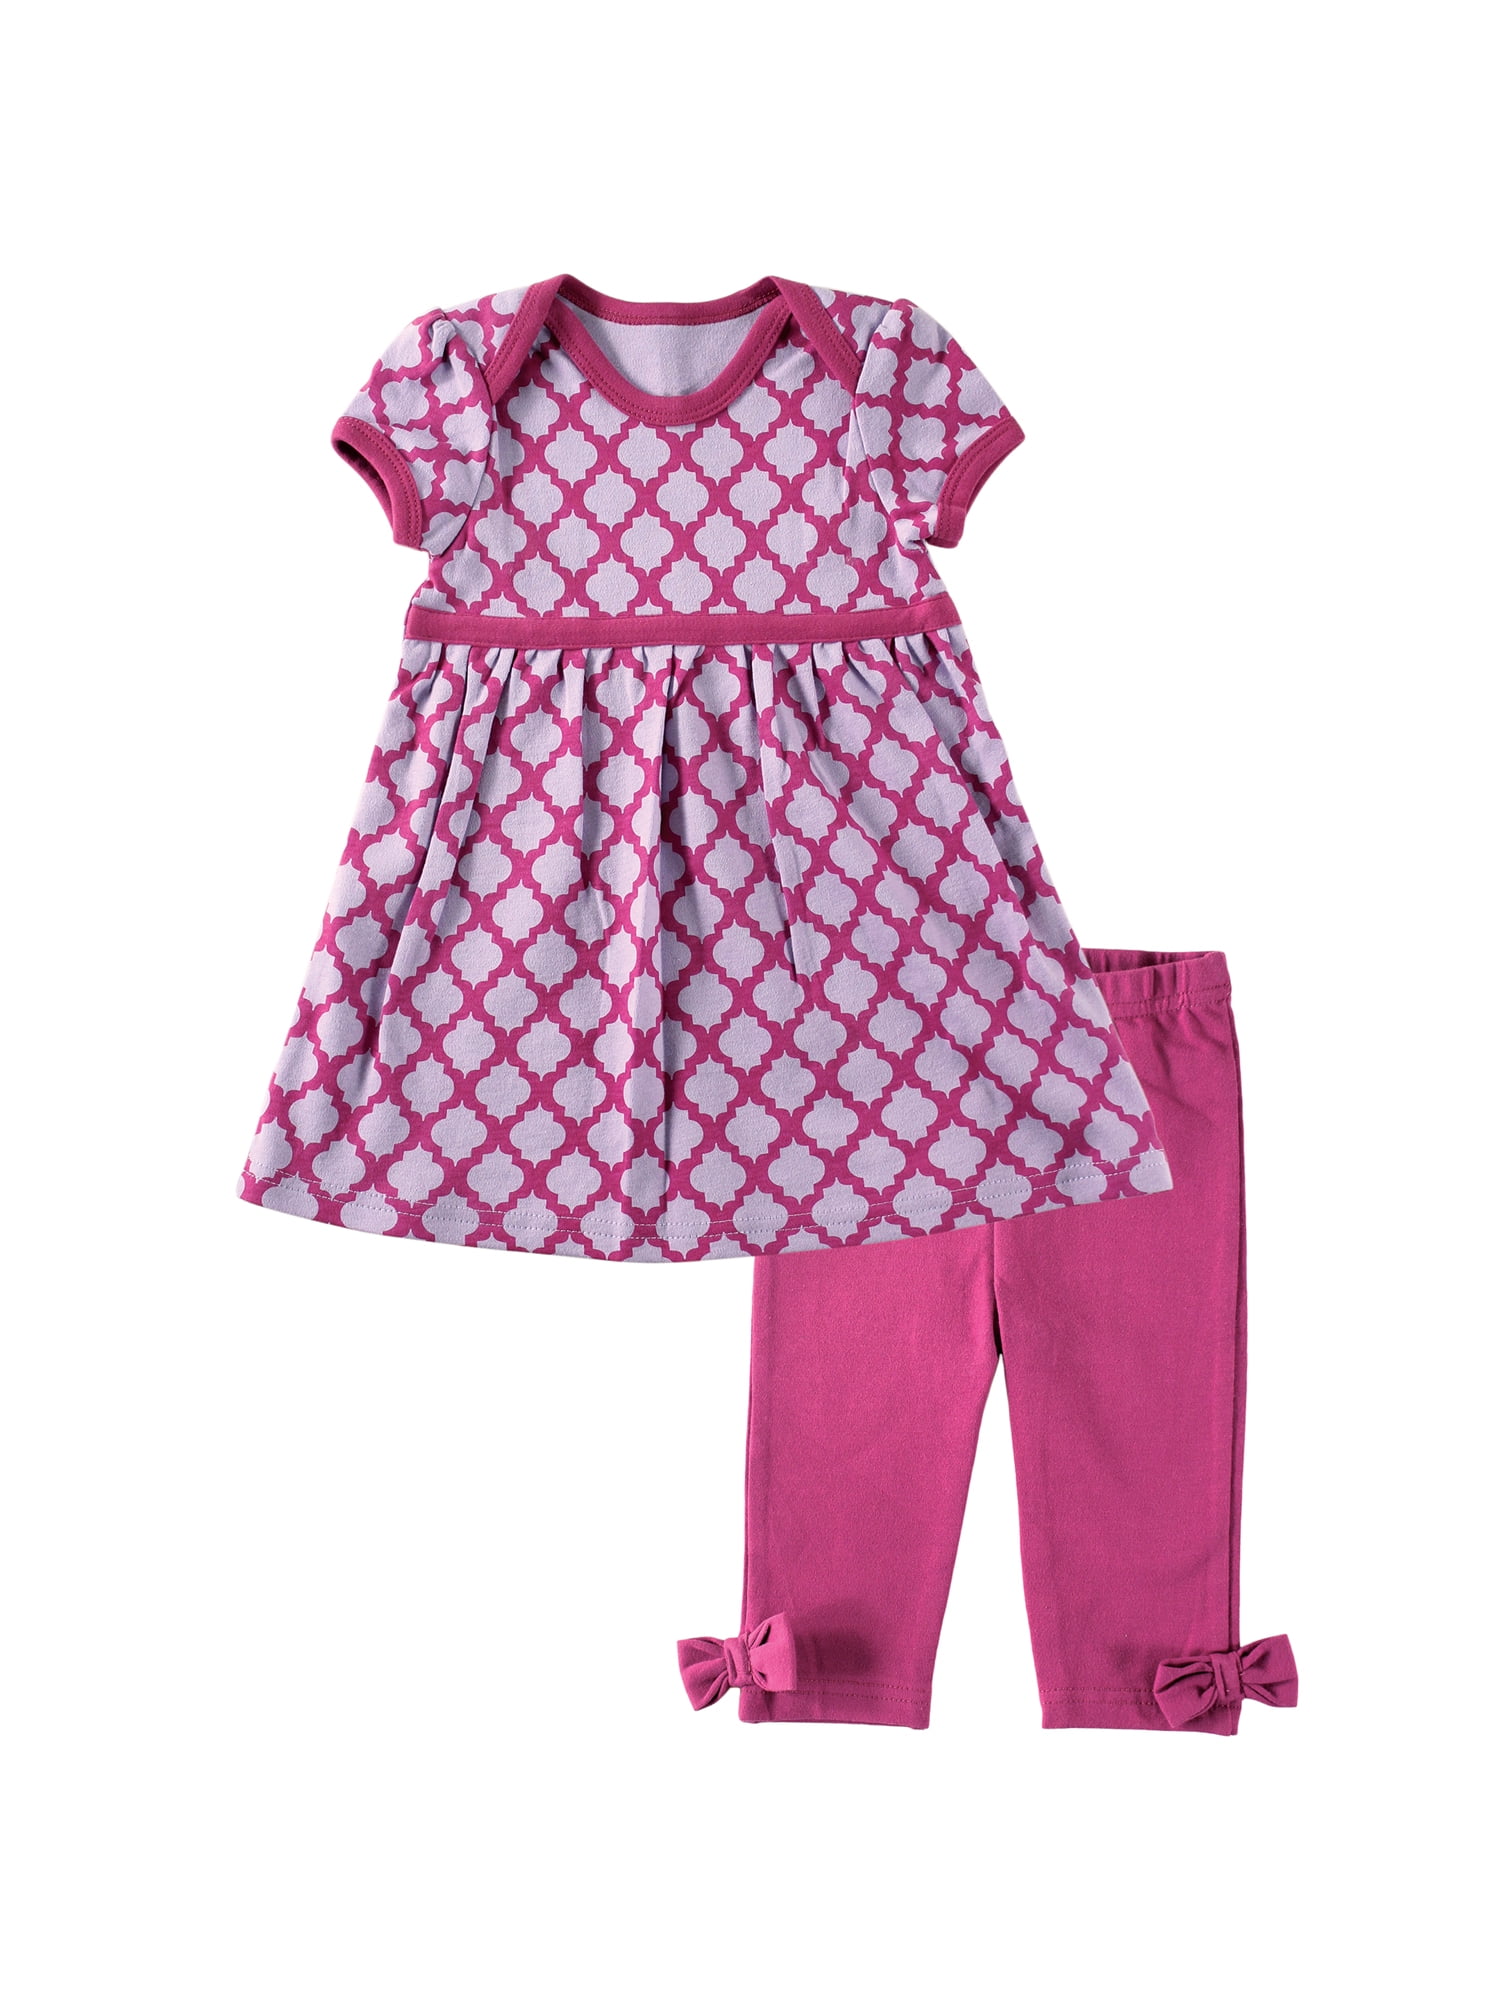 Hudson Baby - Baby Girls' Dress and Leggings - Walmart.com - Walmart.com